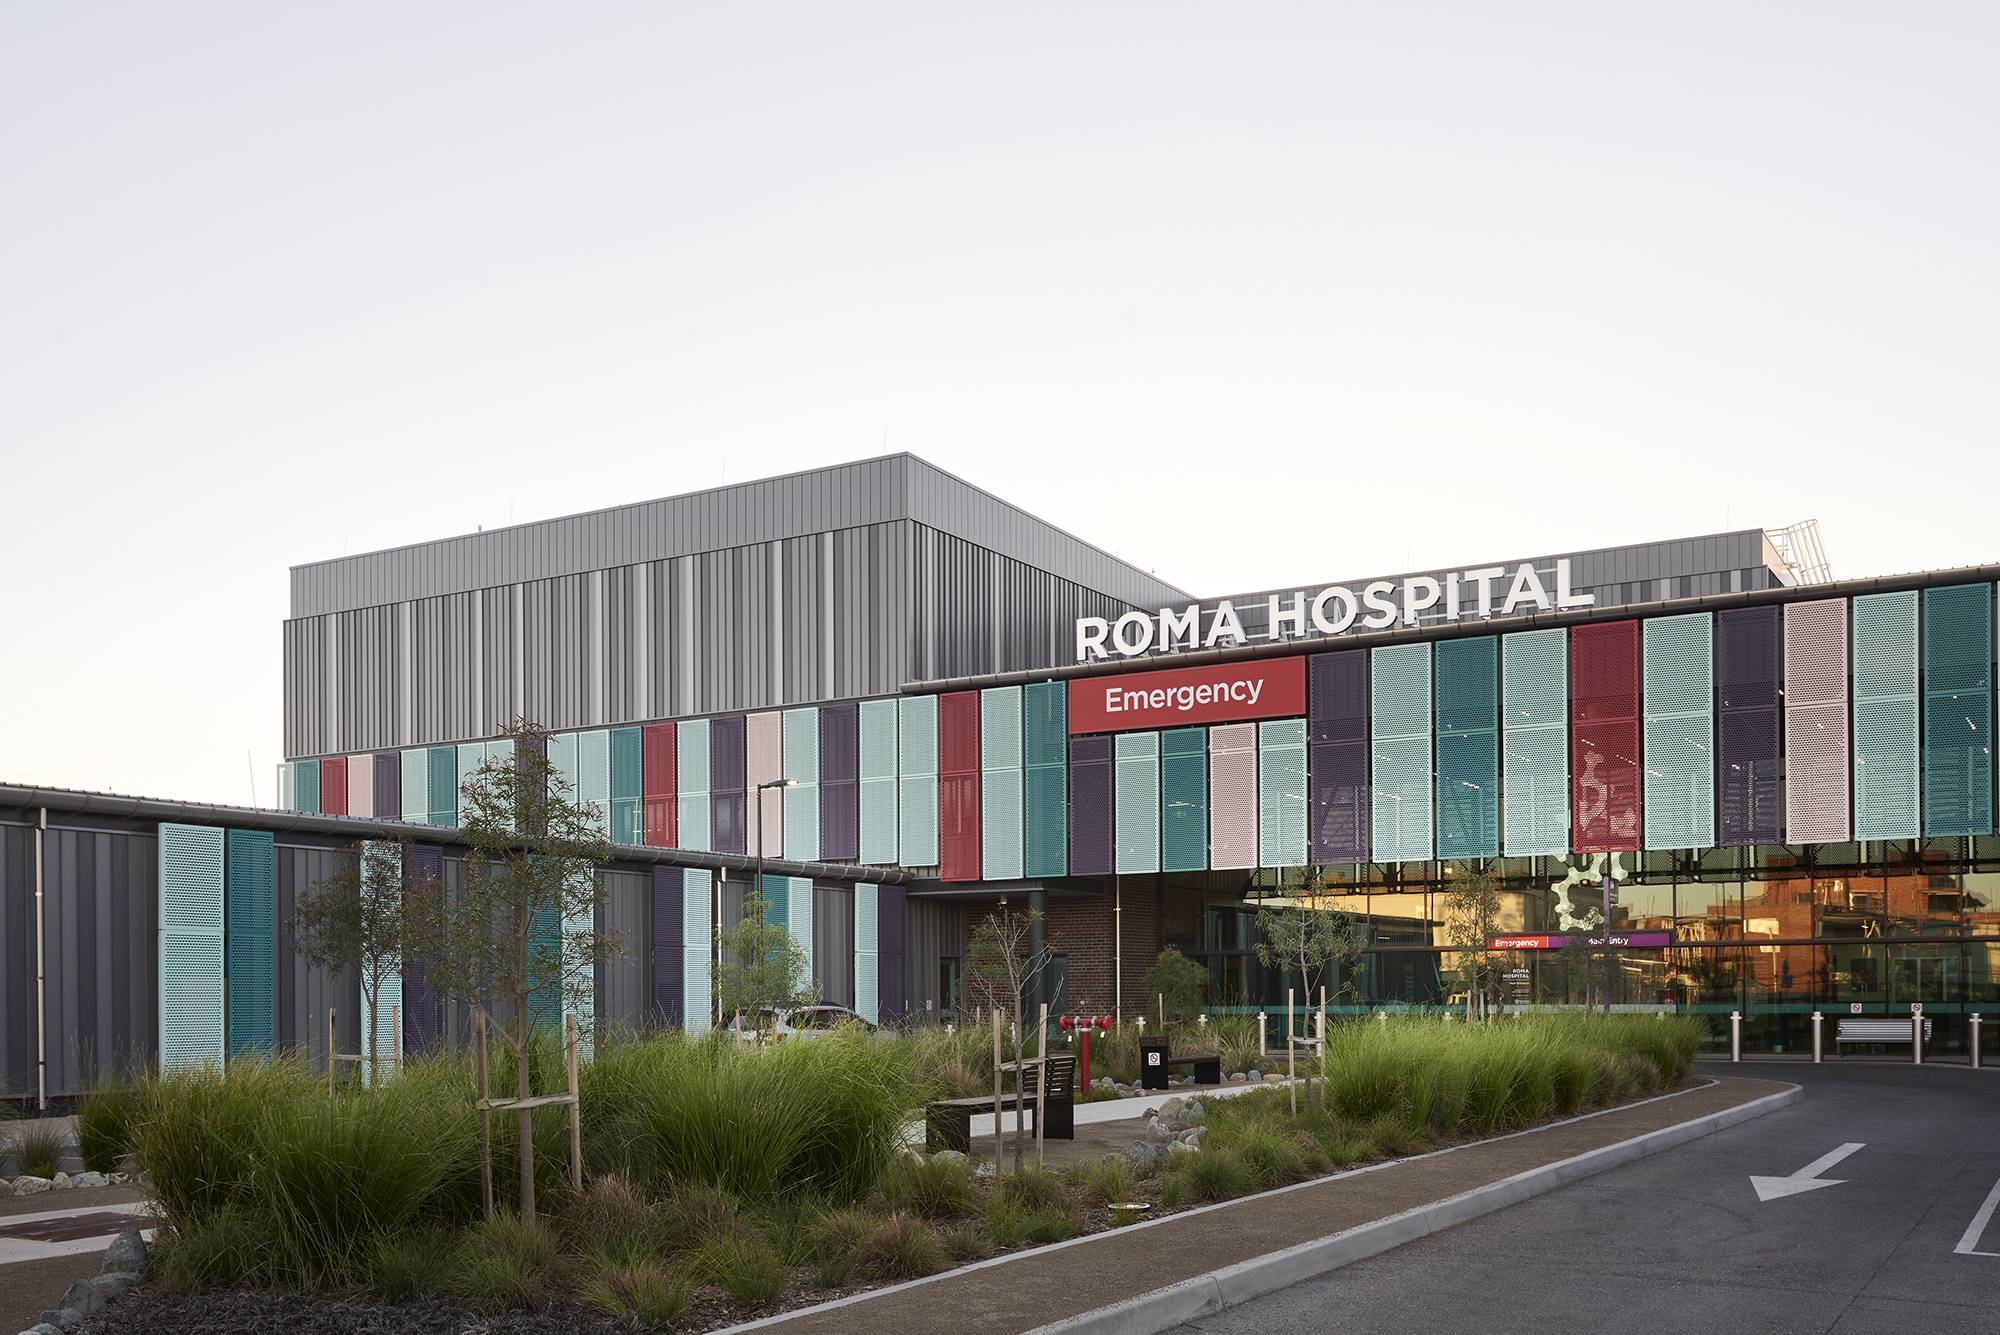 RomaHospital_220_LowRes-w.jpg